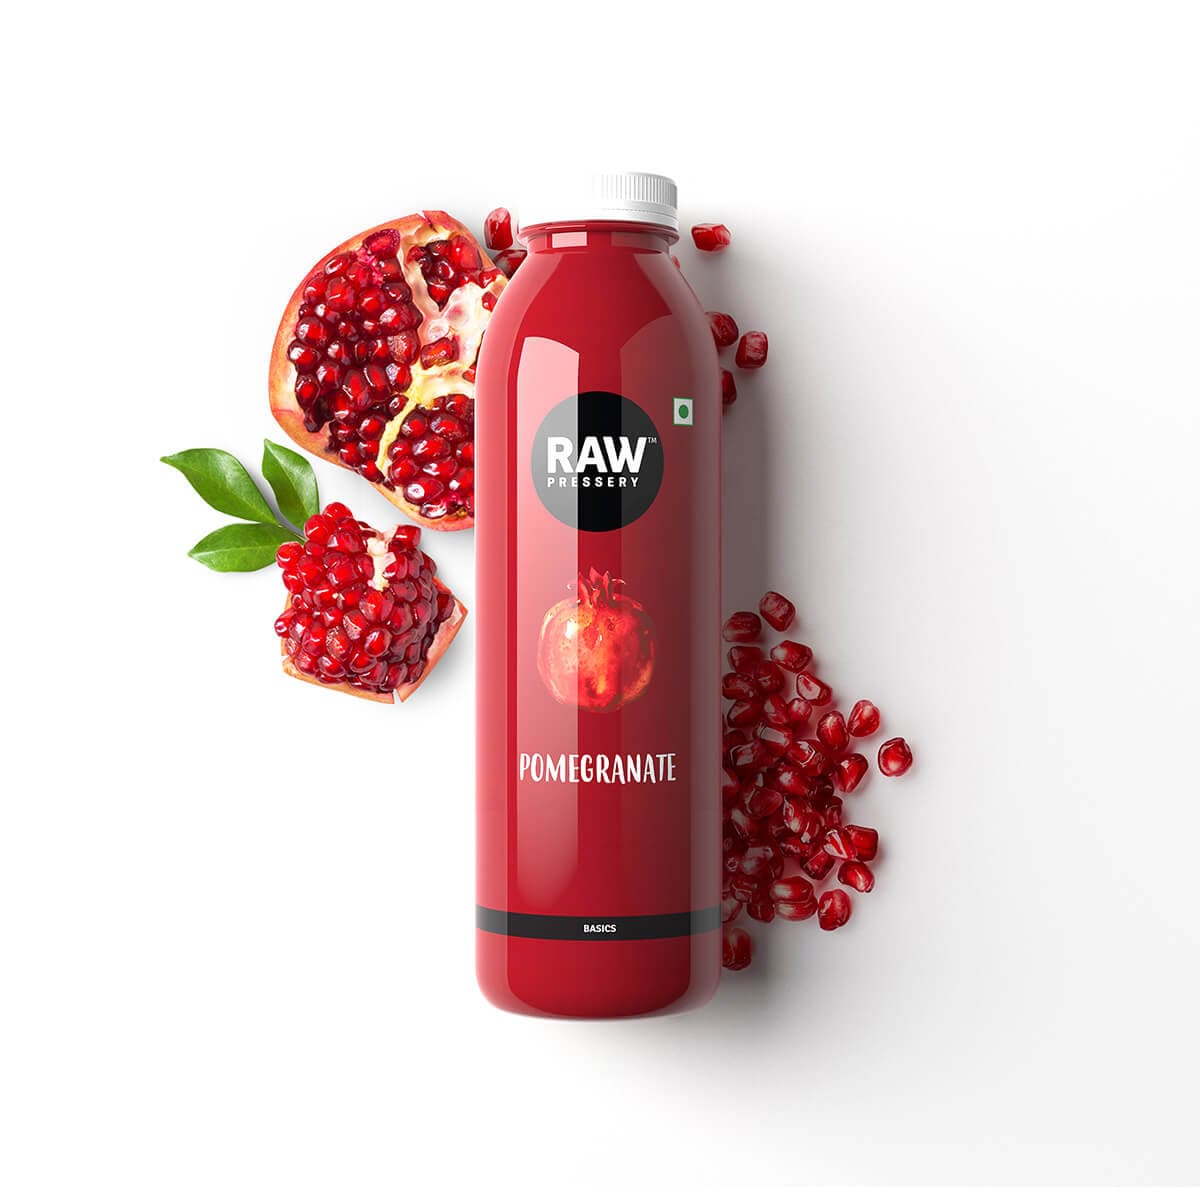 Raw Pressery PomegranateFresh Juice.